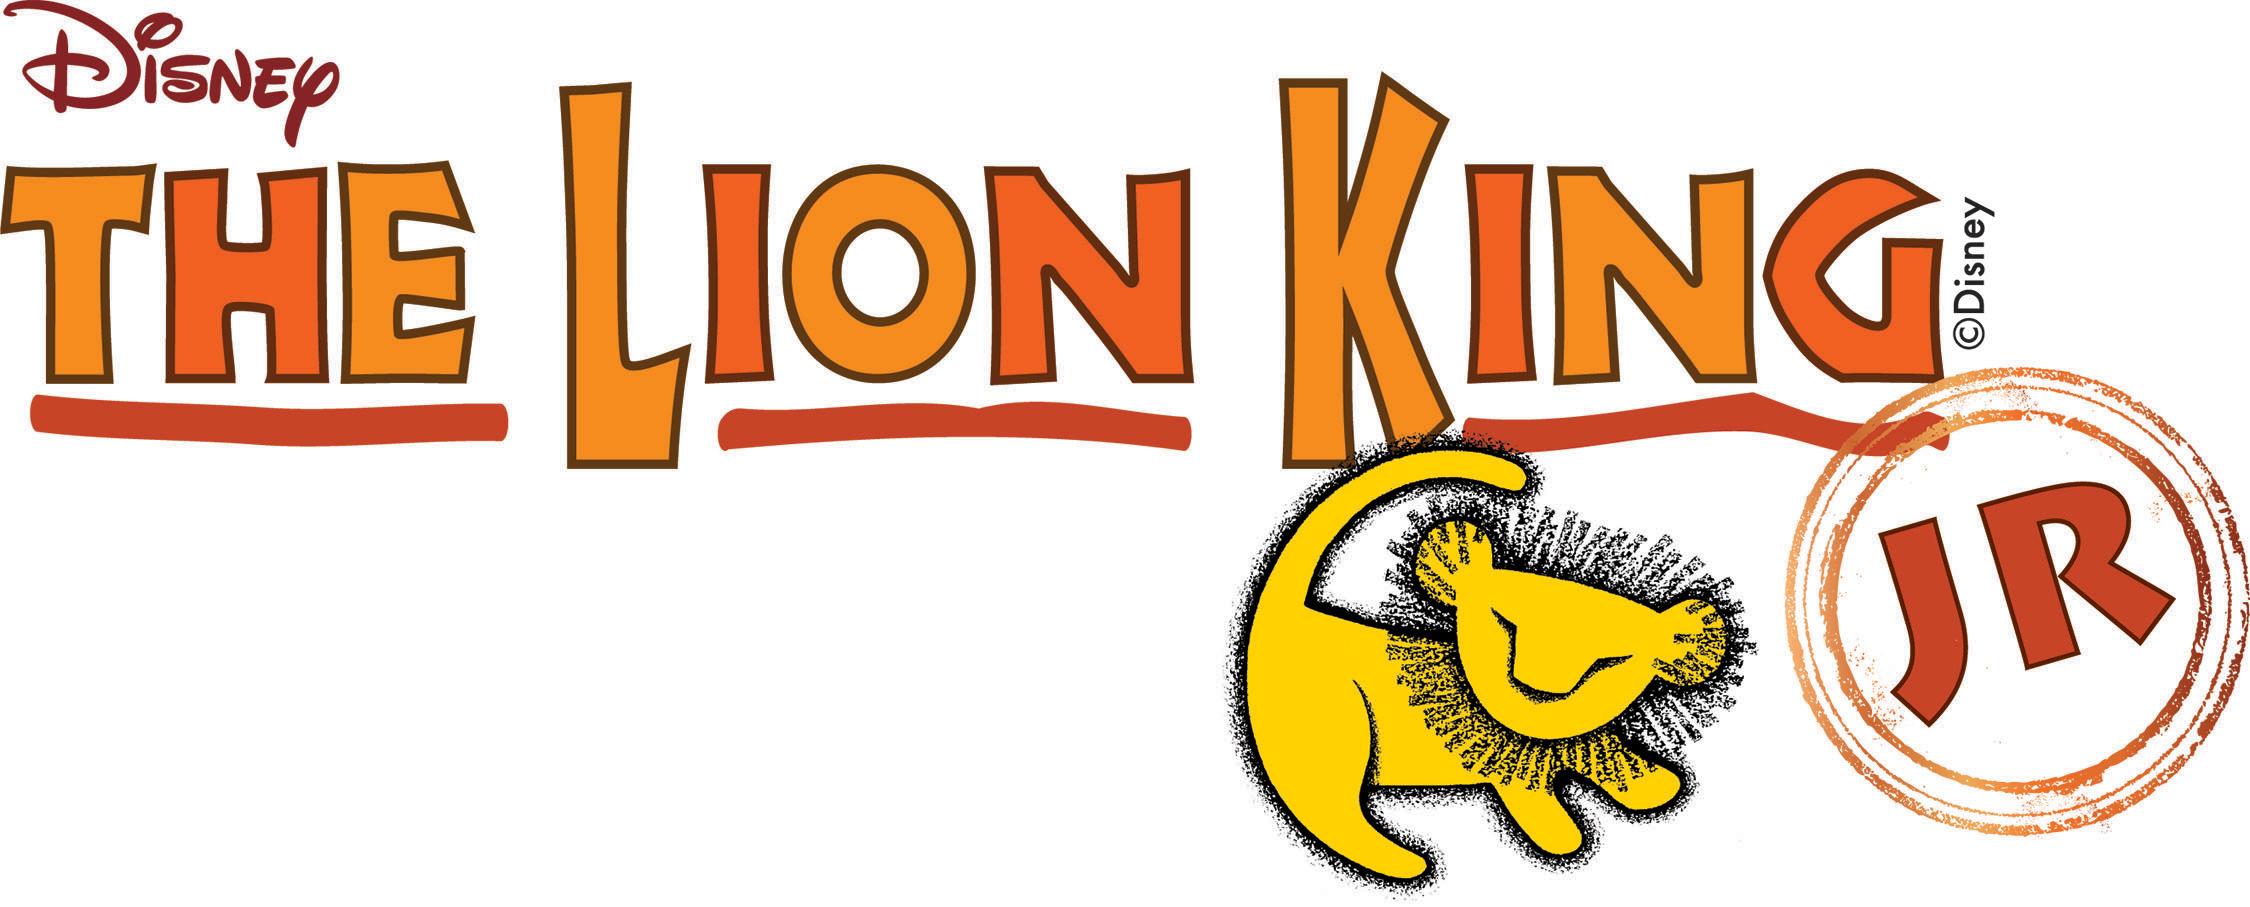 Disney The Lion King Logo - Disney's The Lion King Jr